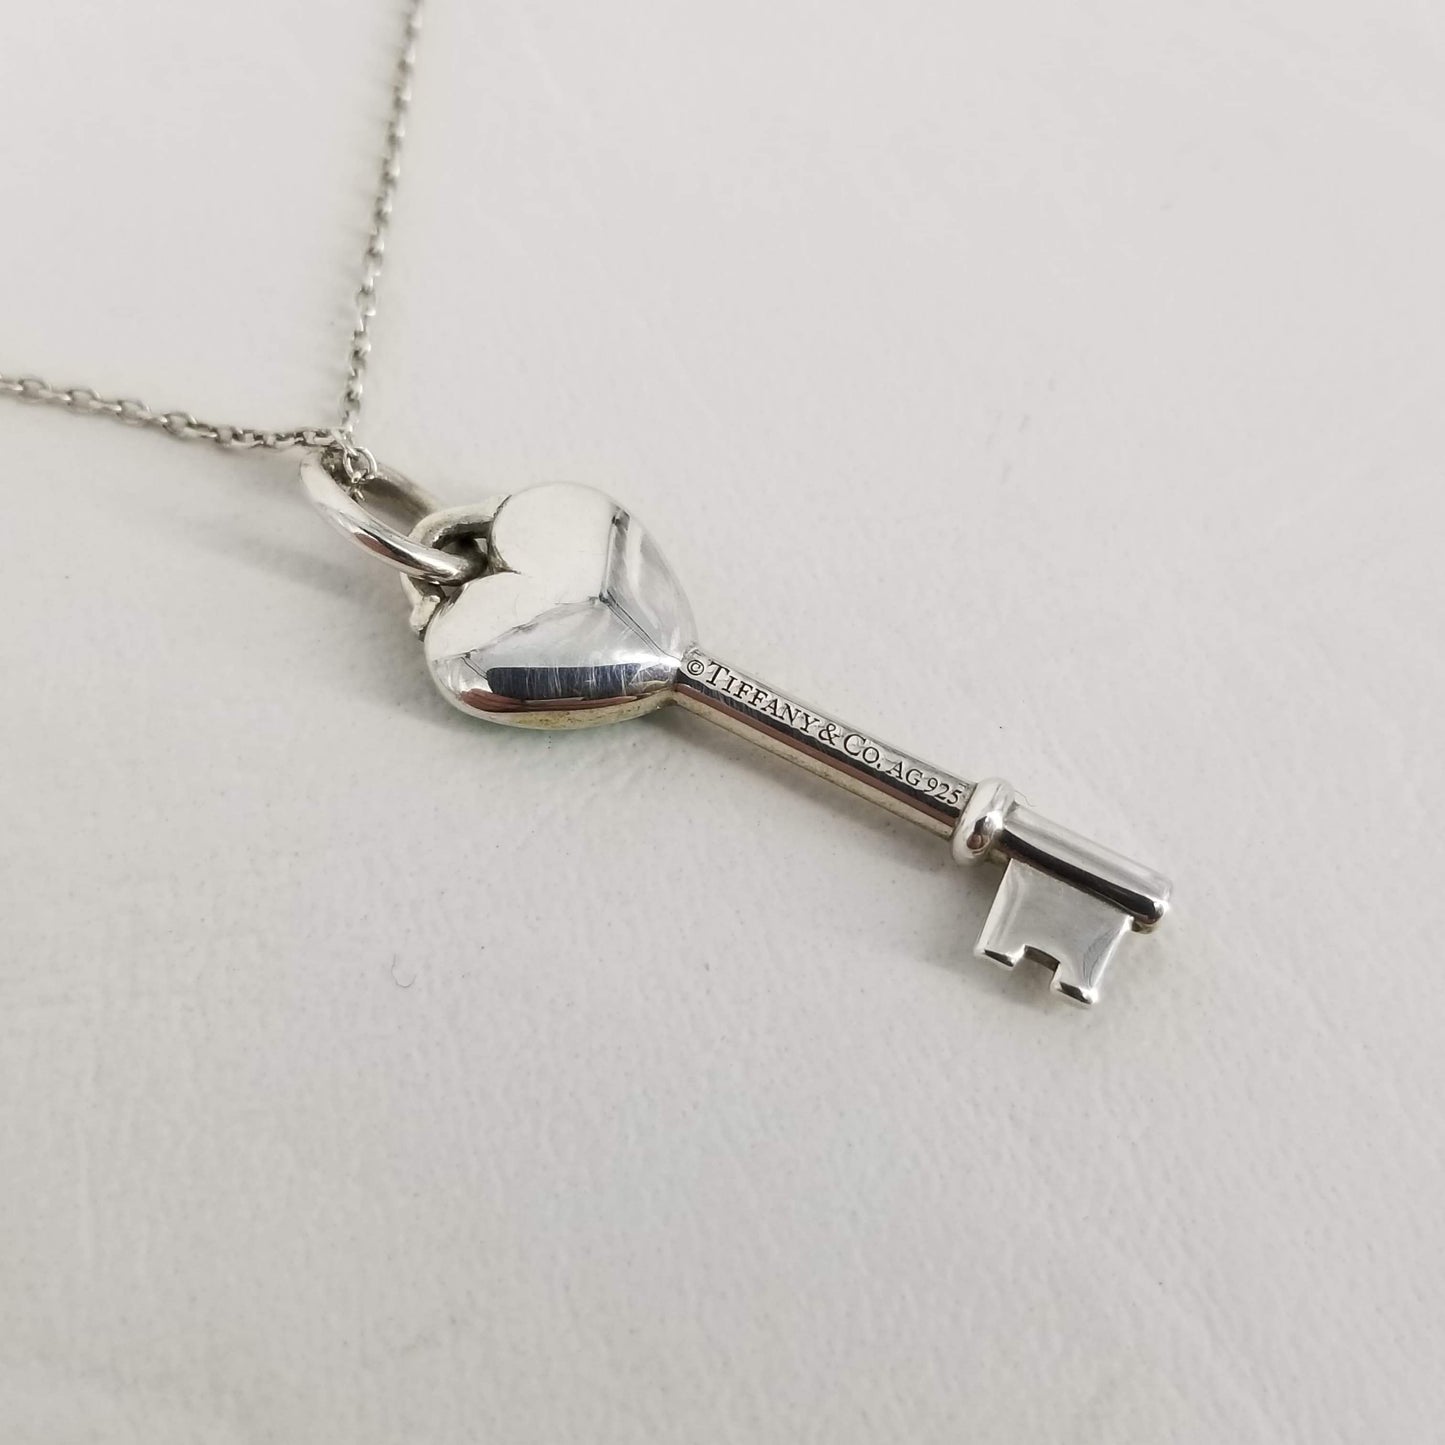 Authentic Tiffany & Co. Silver Enamel Heart Key & 16” Chain